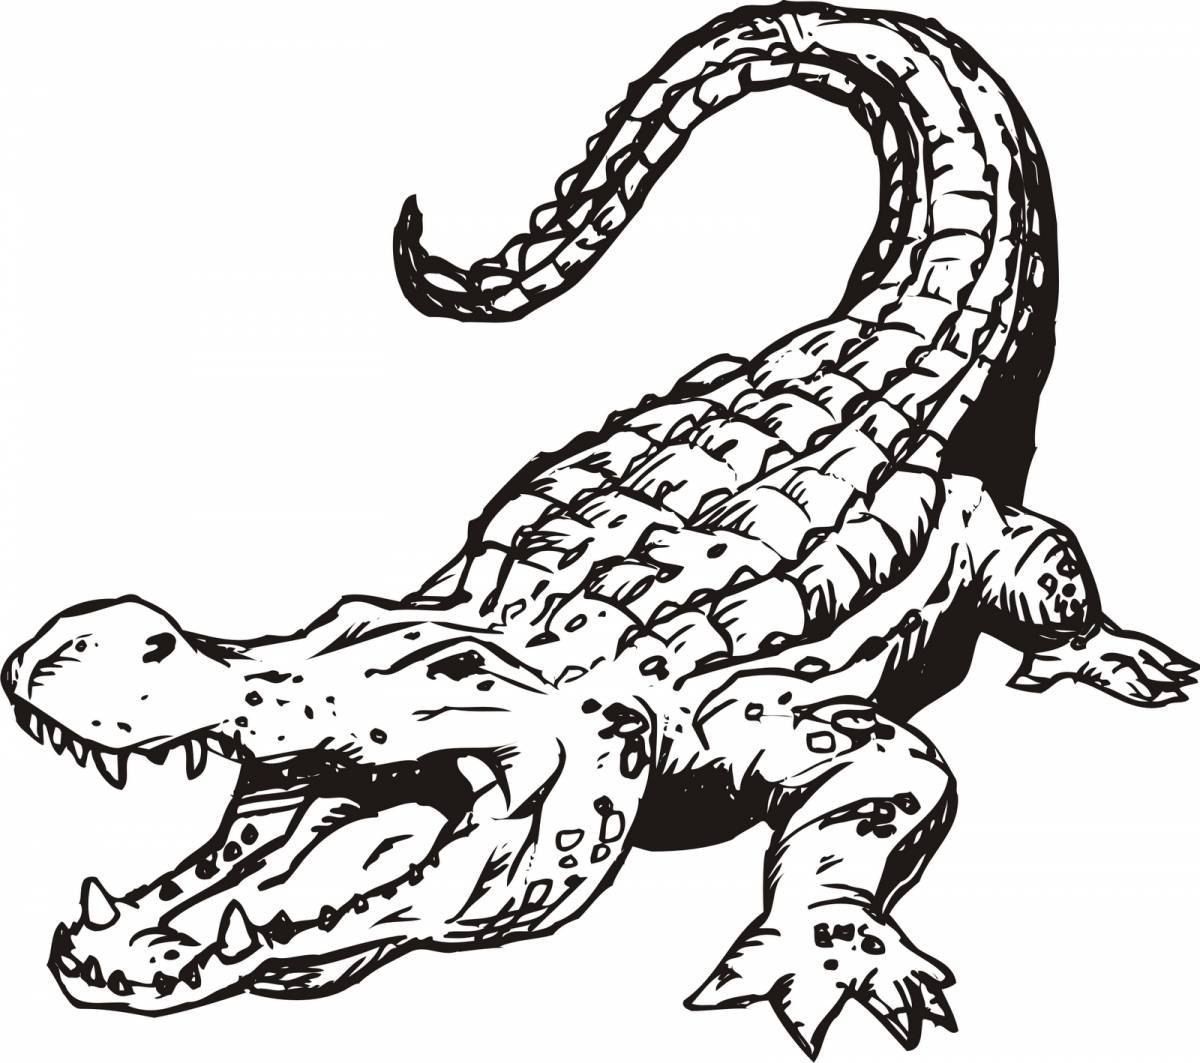 Incredible crocodile coloring book for kids